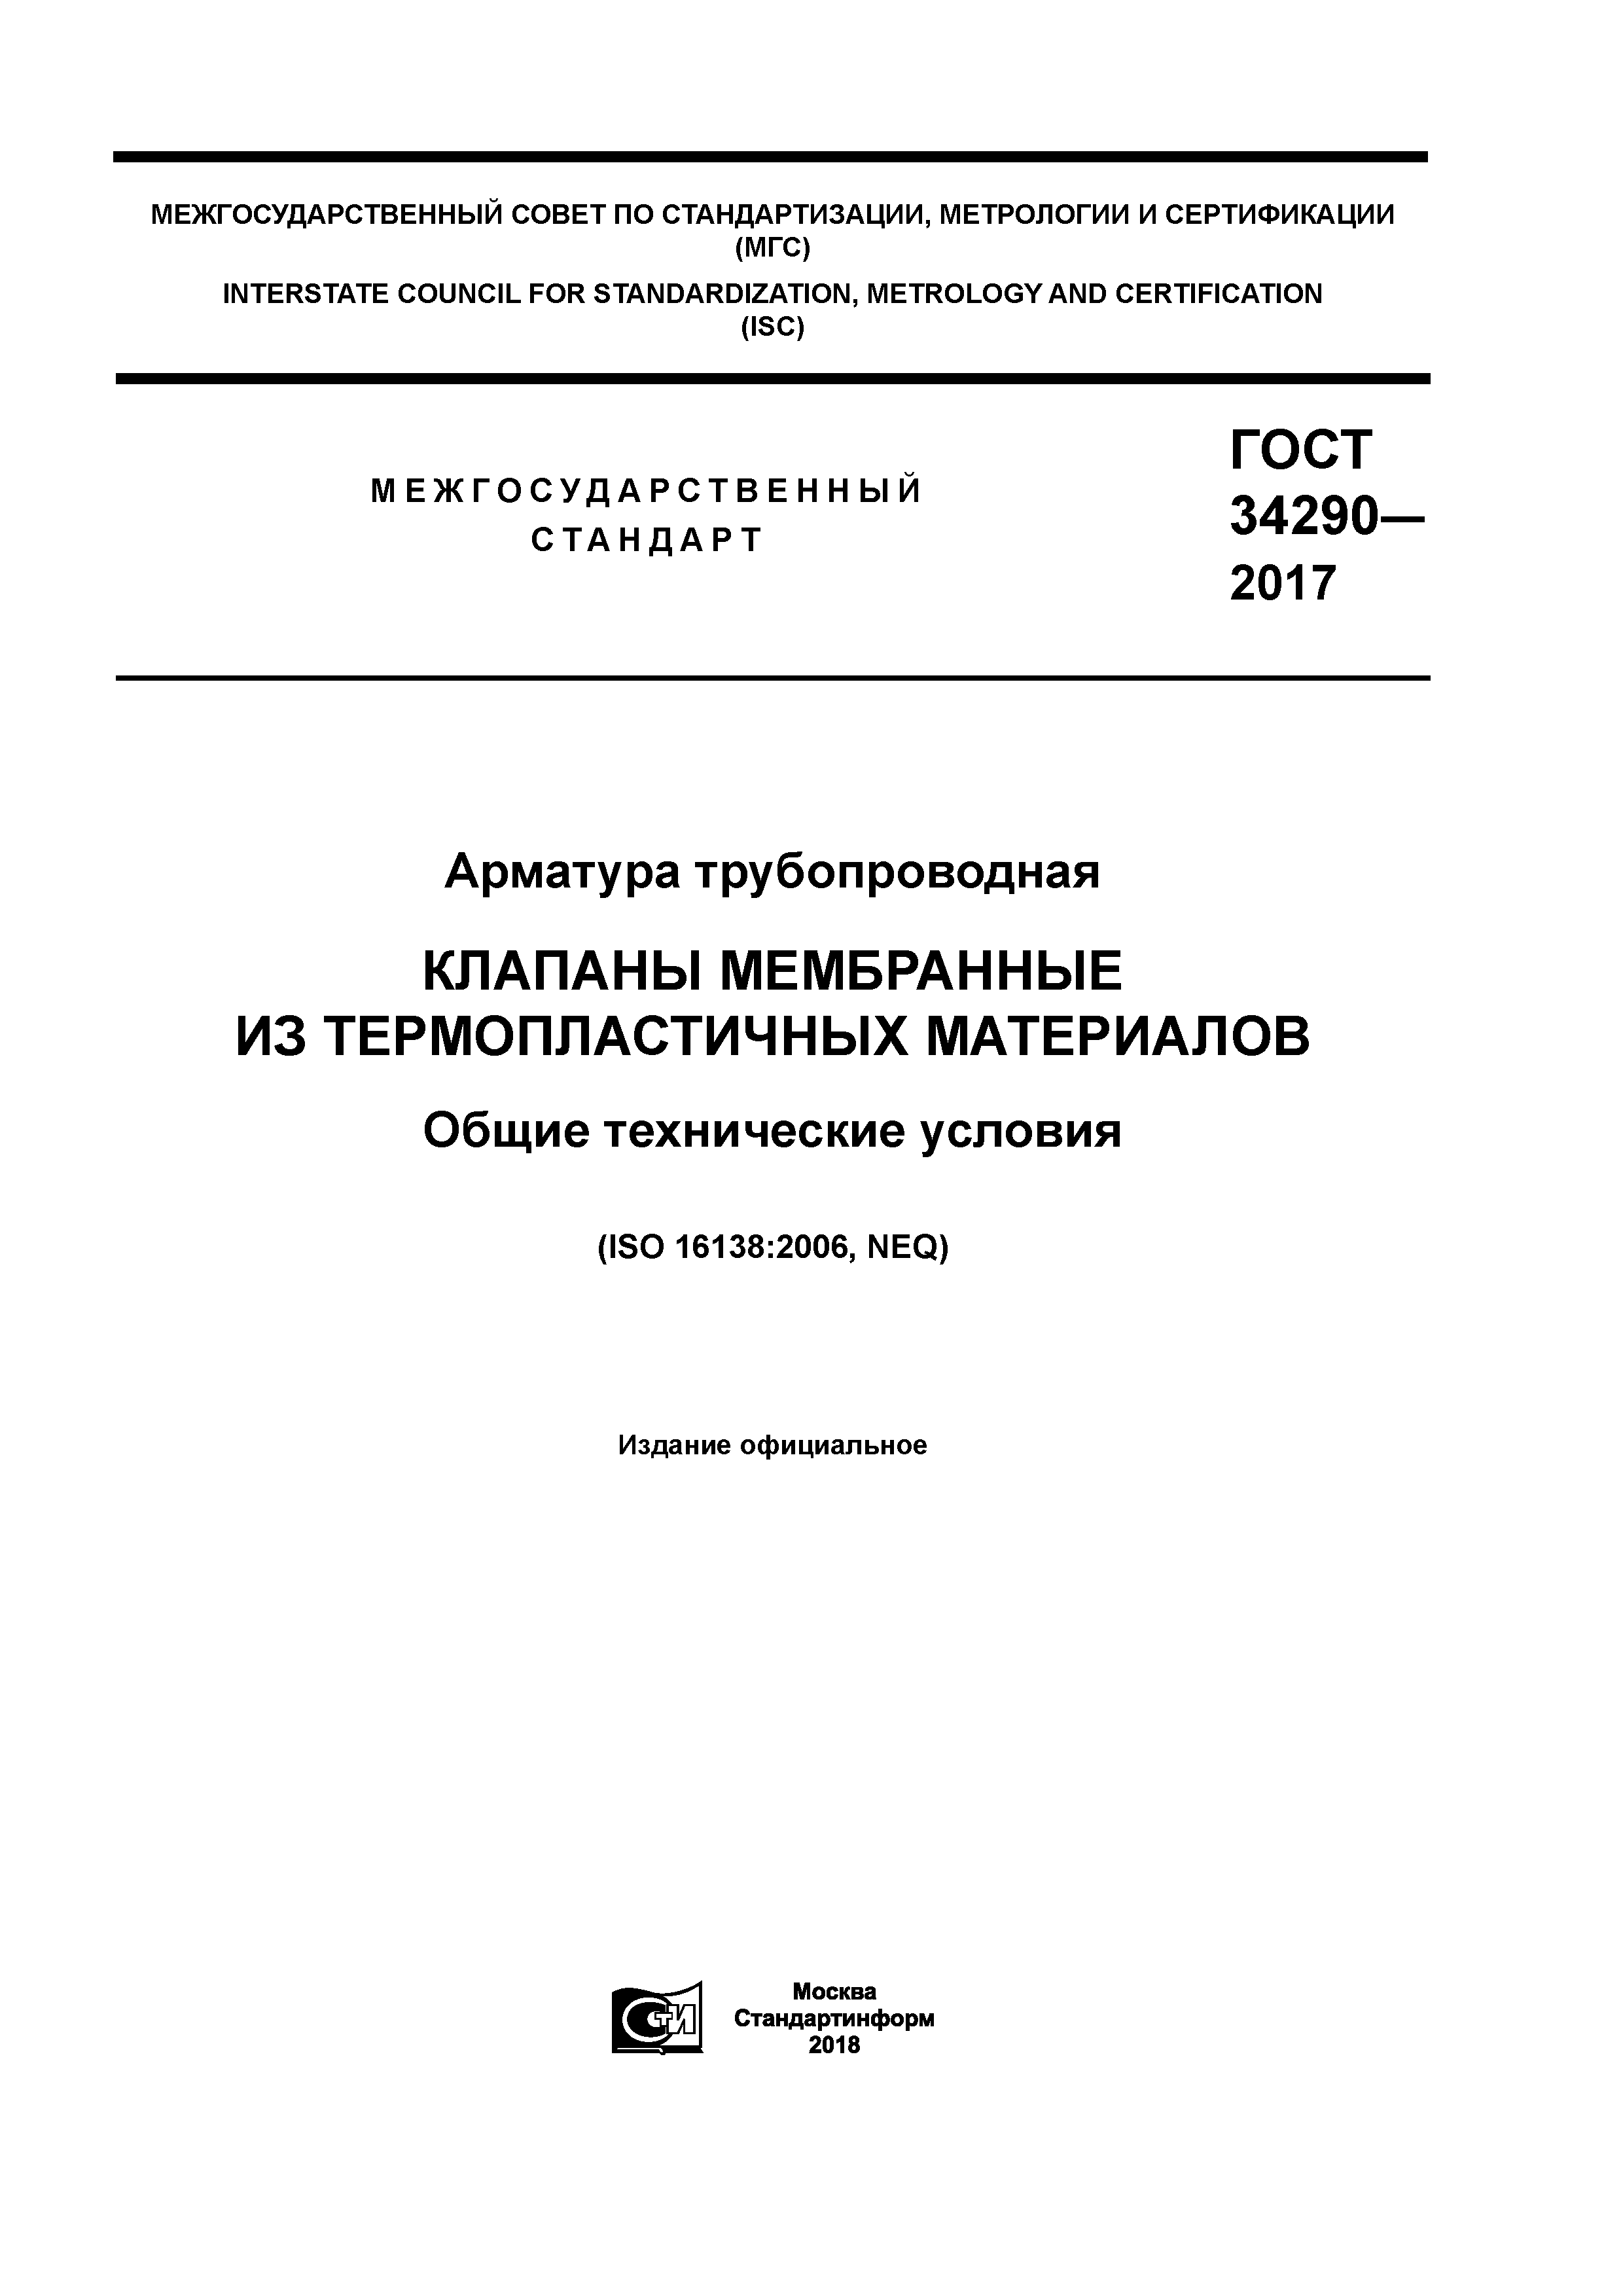 ГОСТ 34290-2017